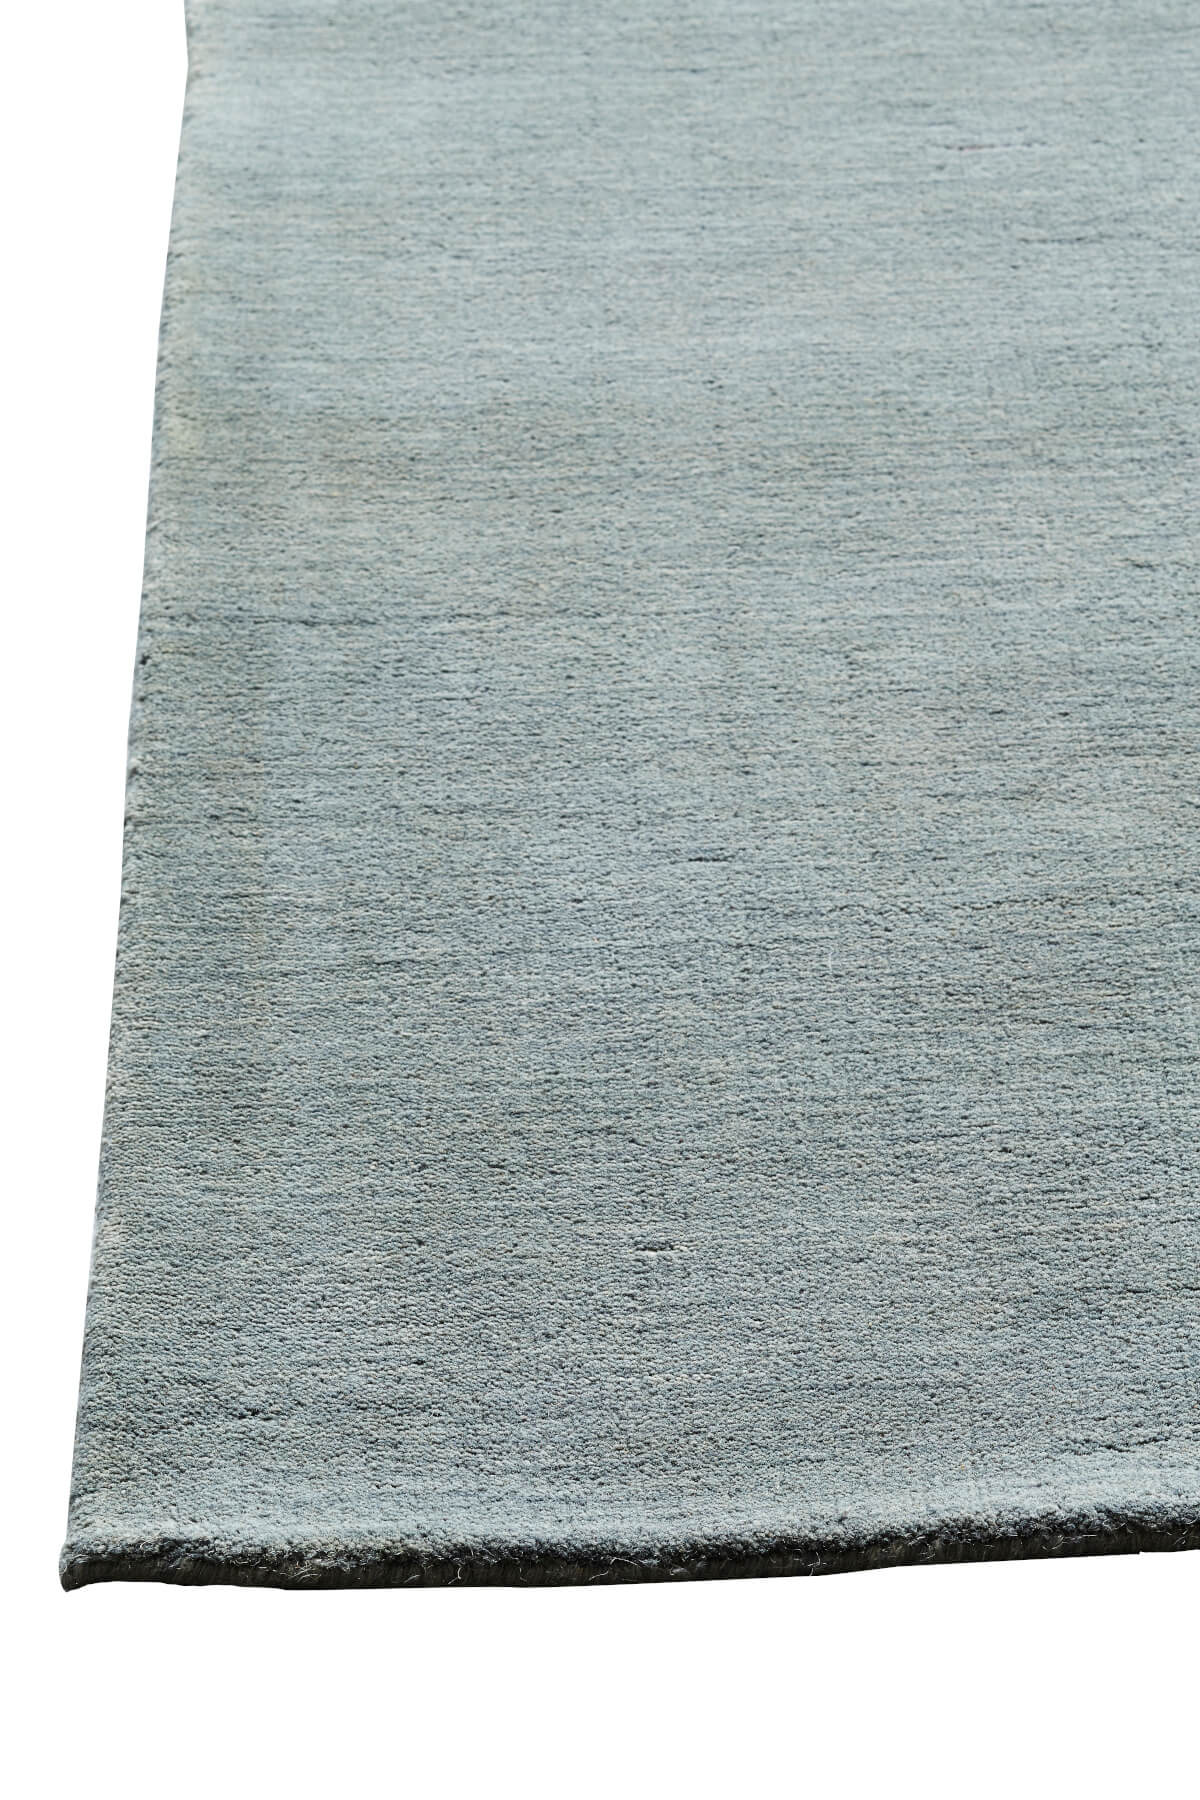 Earth Teppich, 200 x 300 cm, charcoal